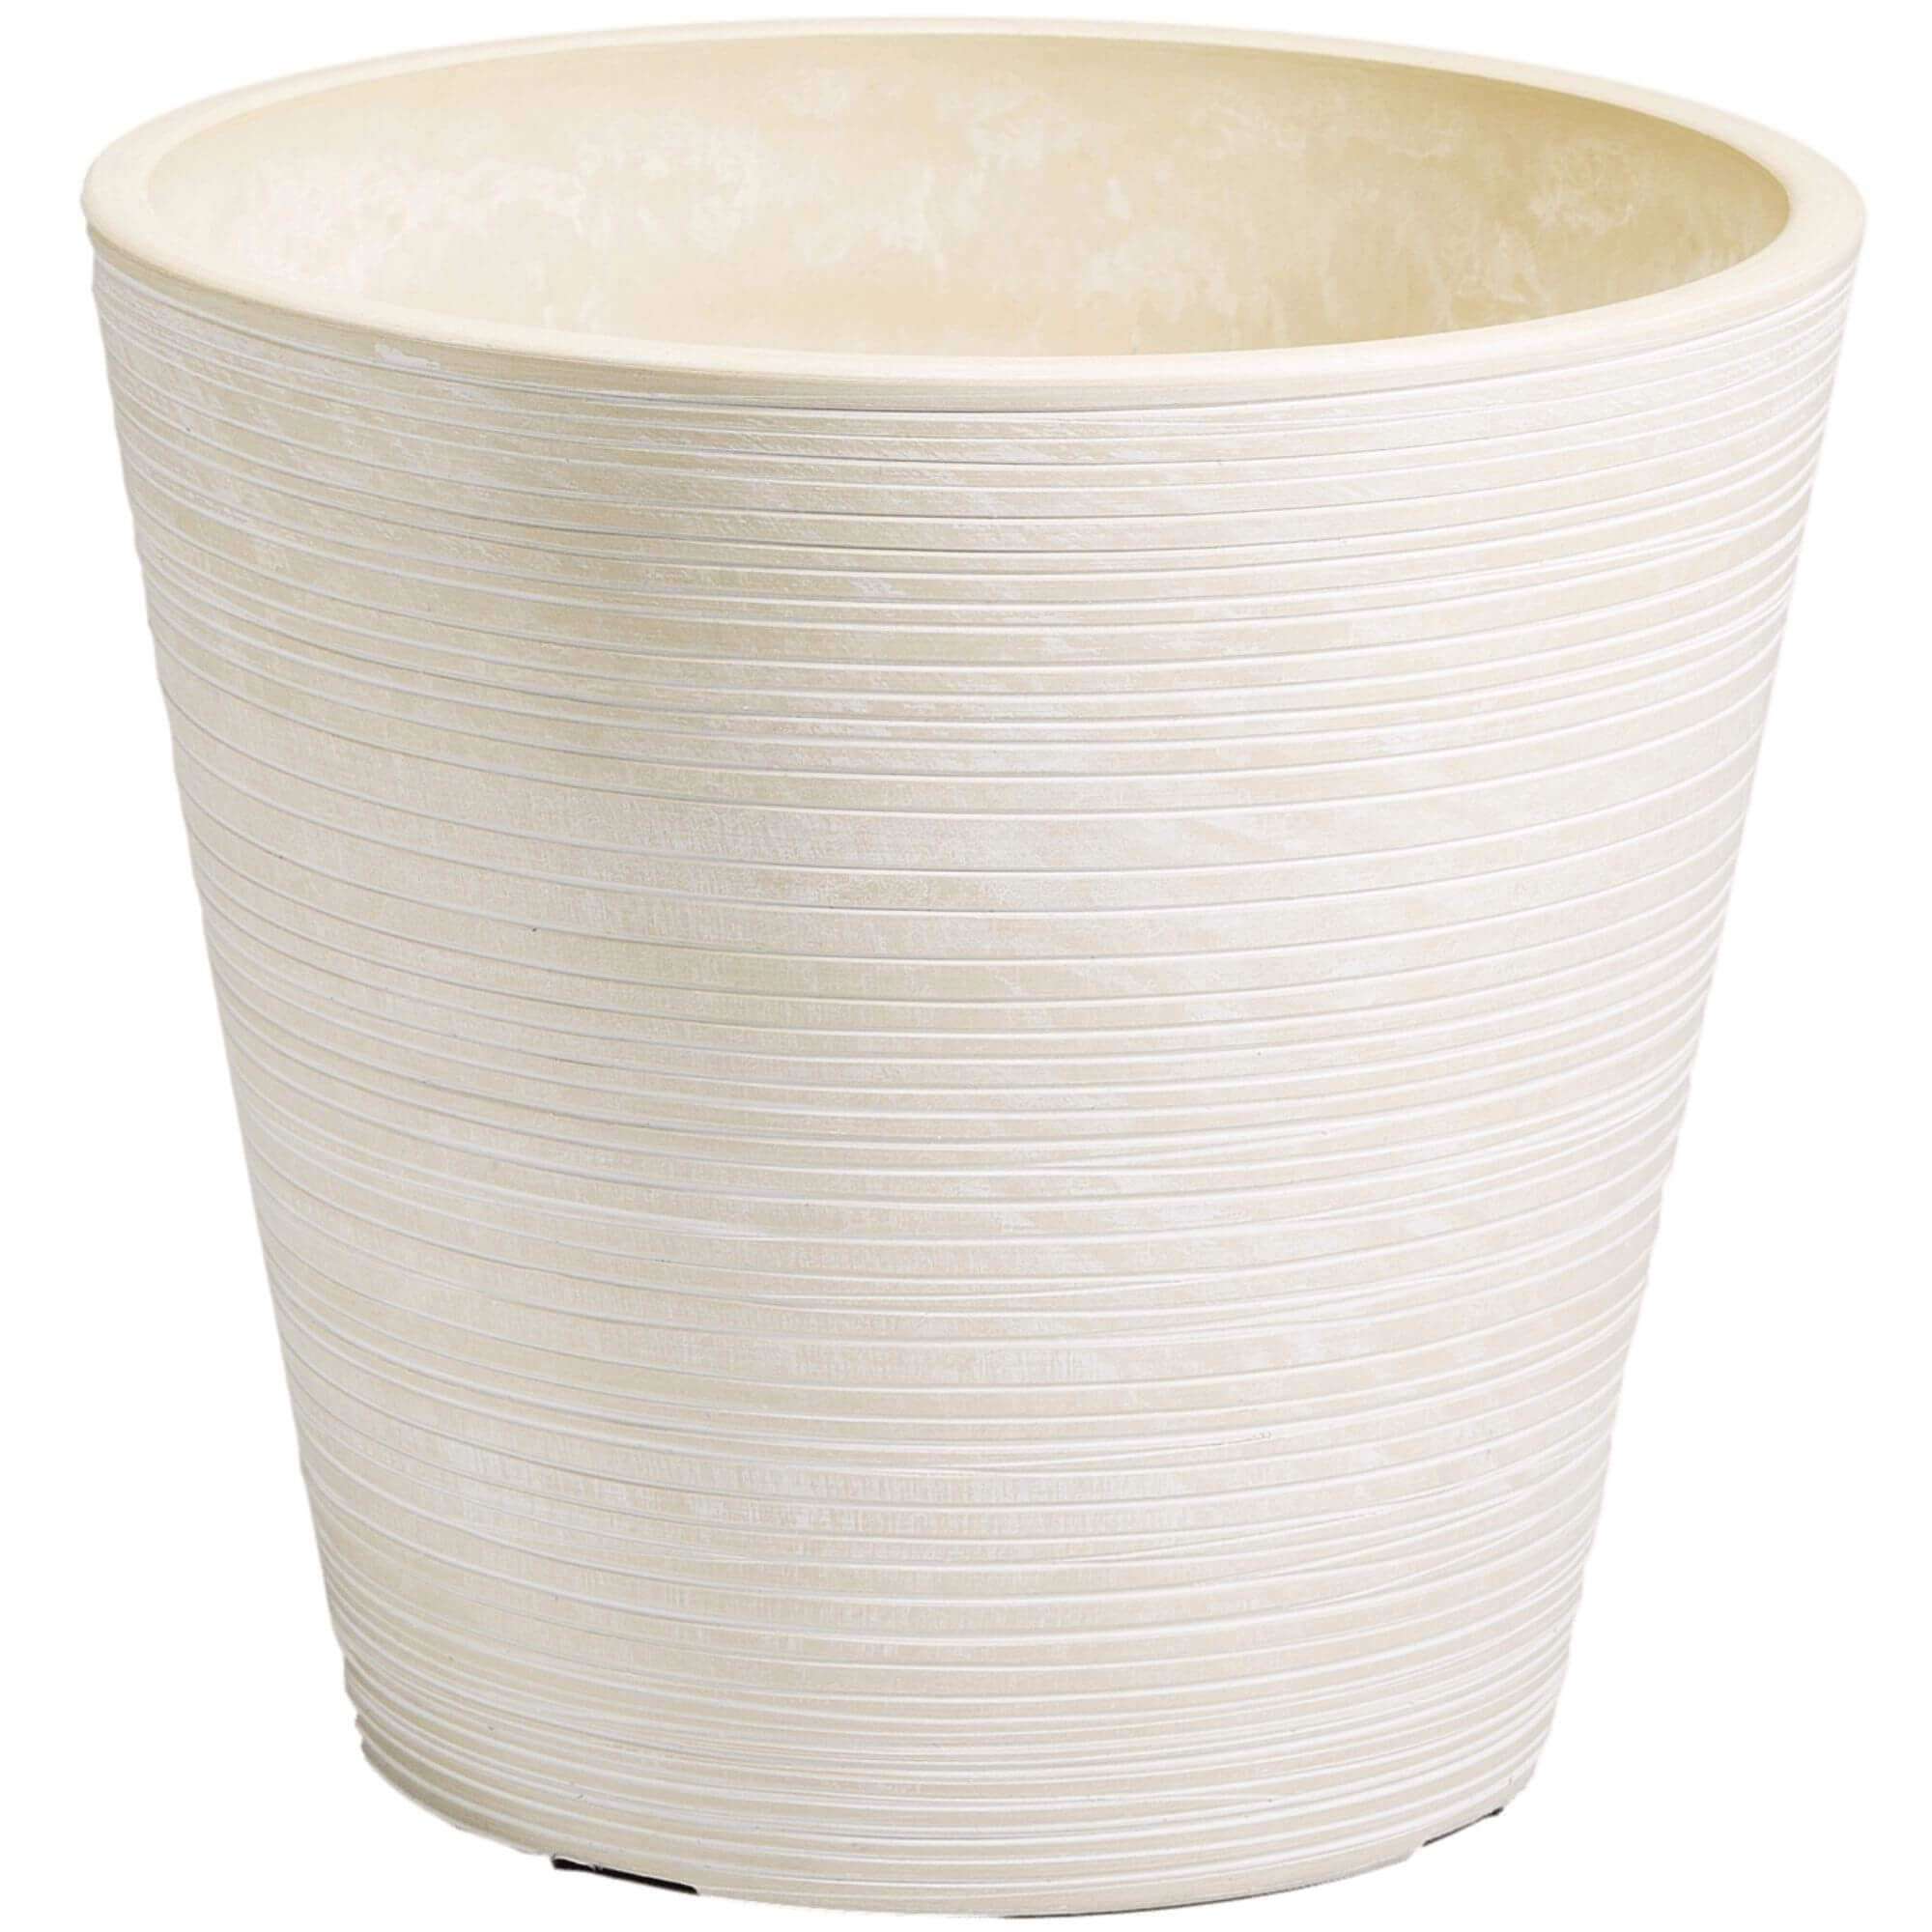 Cream and White Engraved Pot 17cm - Designer Vertical Gardens Pots